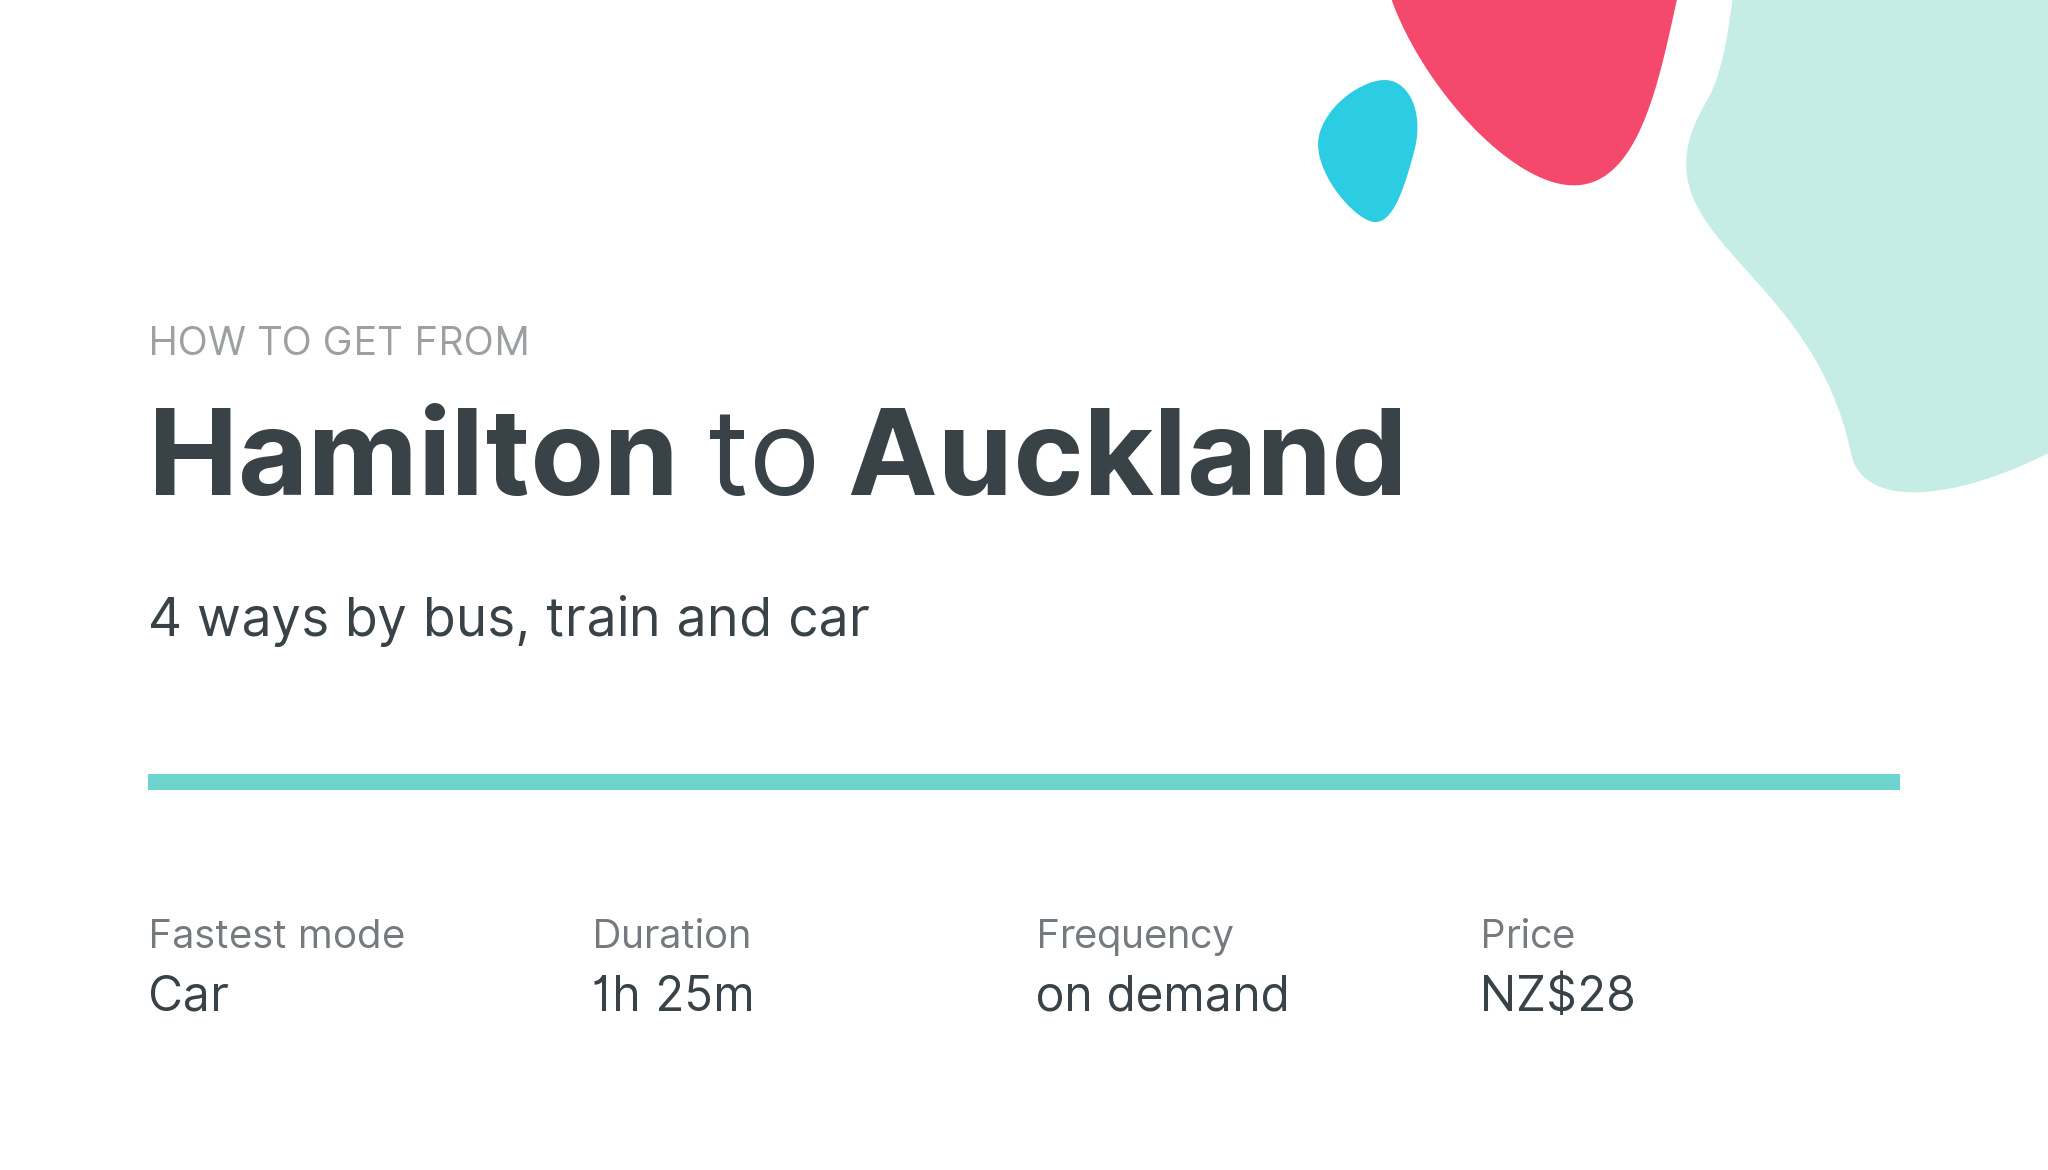 How do I get from Hamilton to Auckland